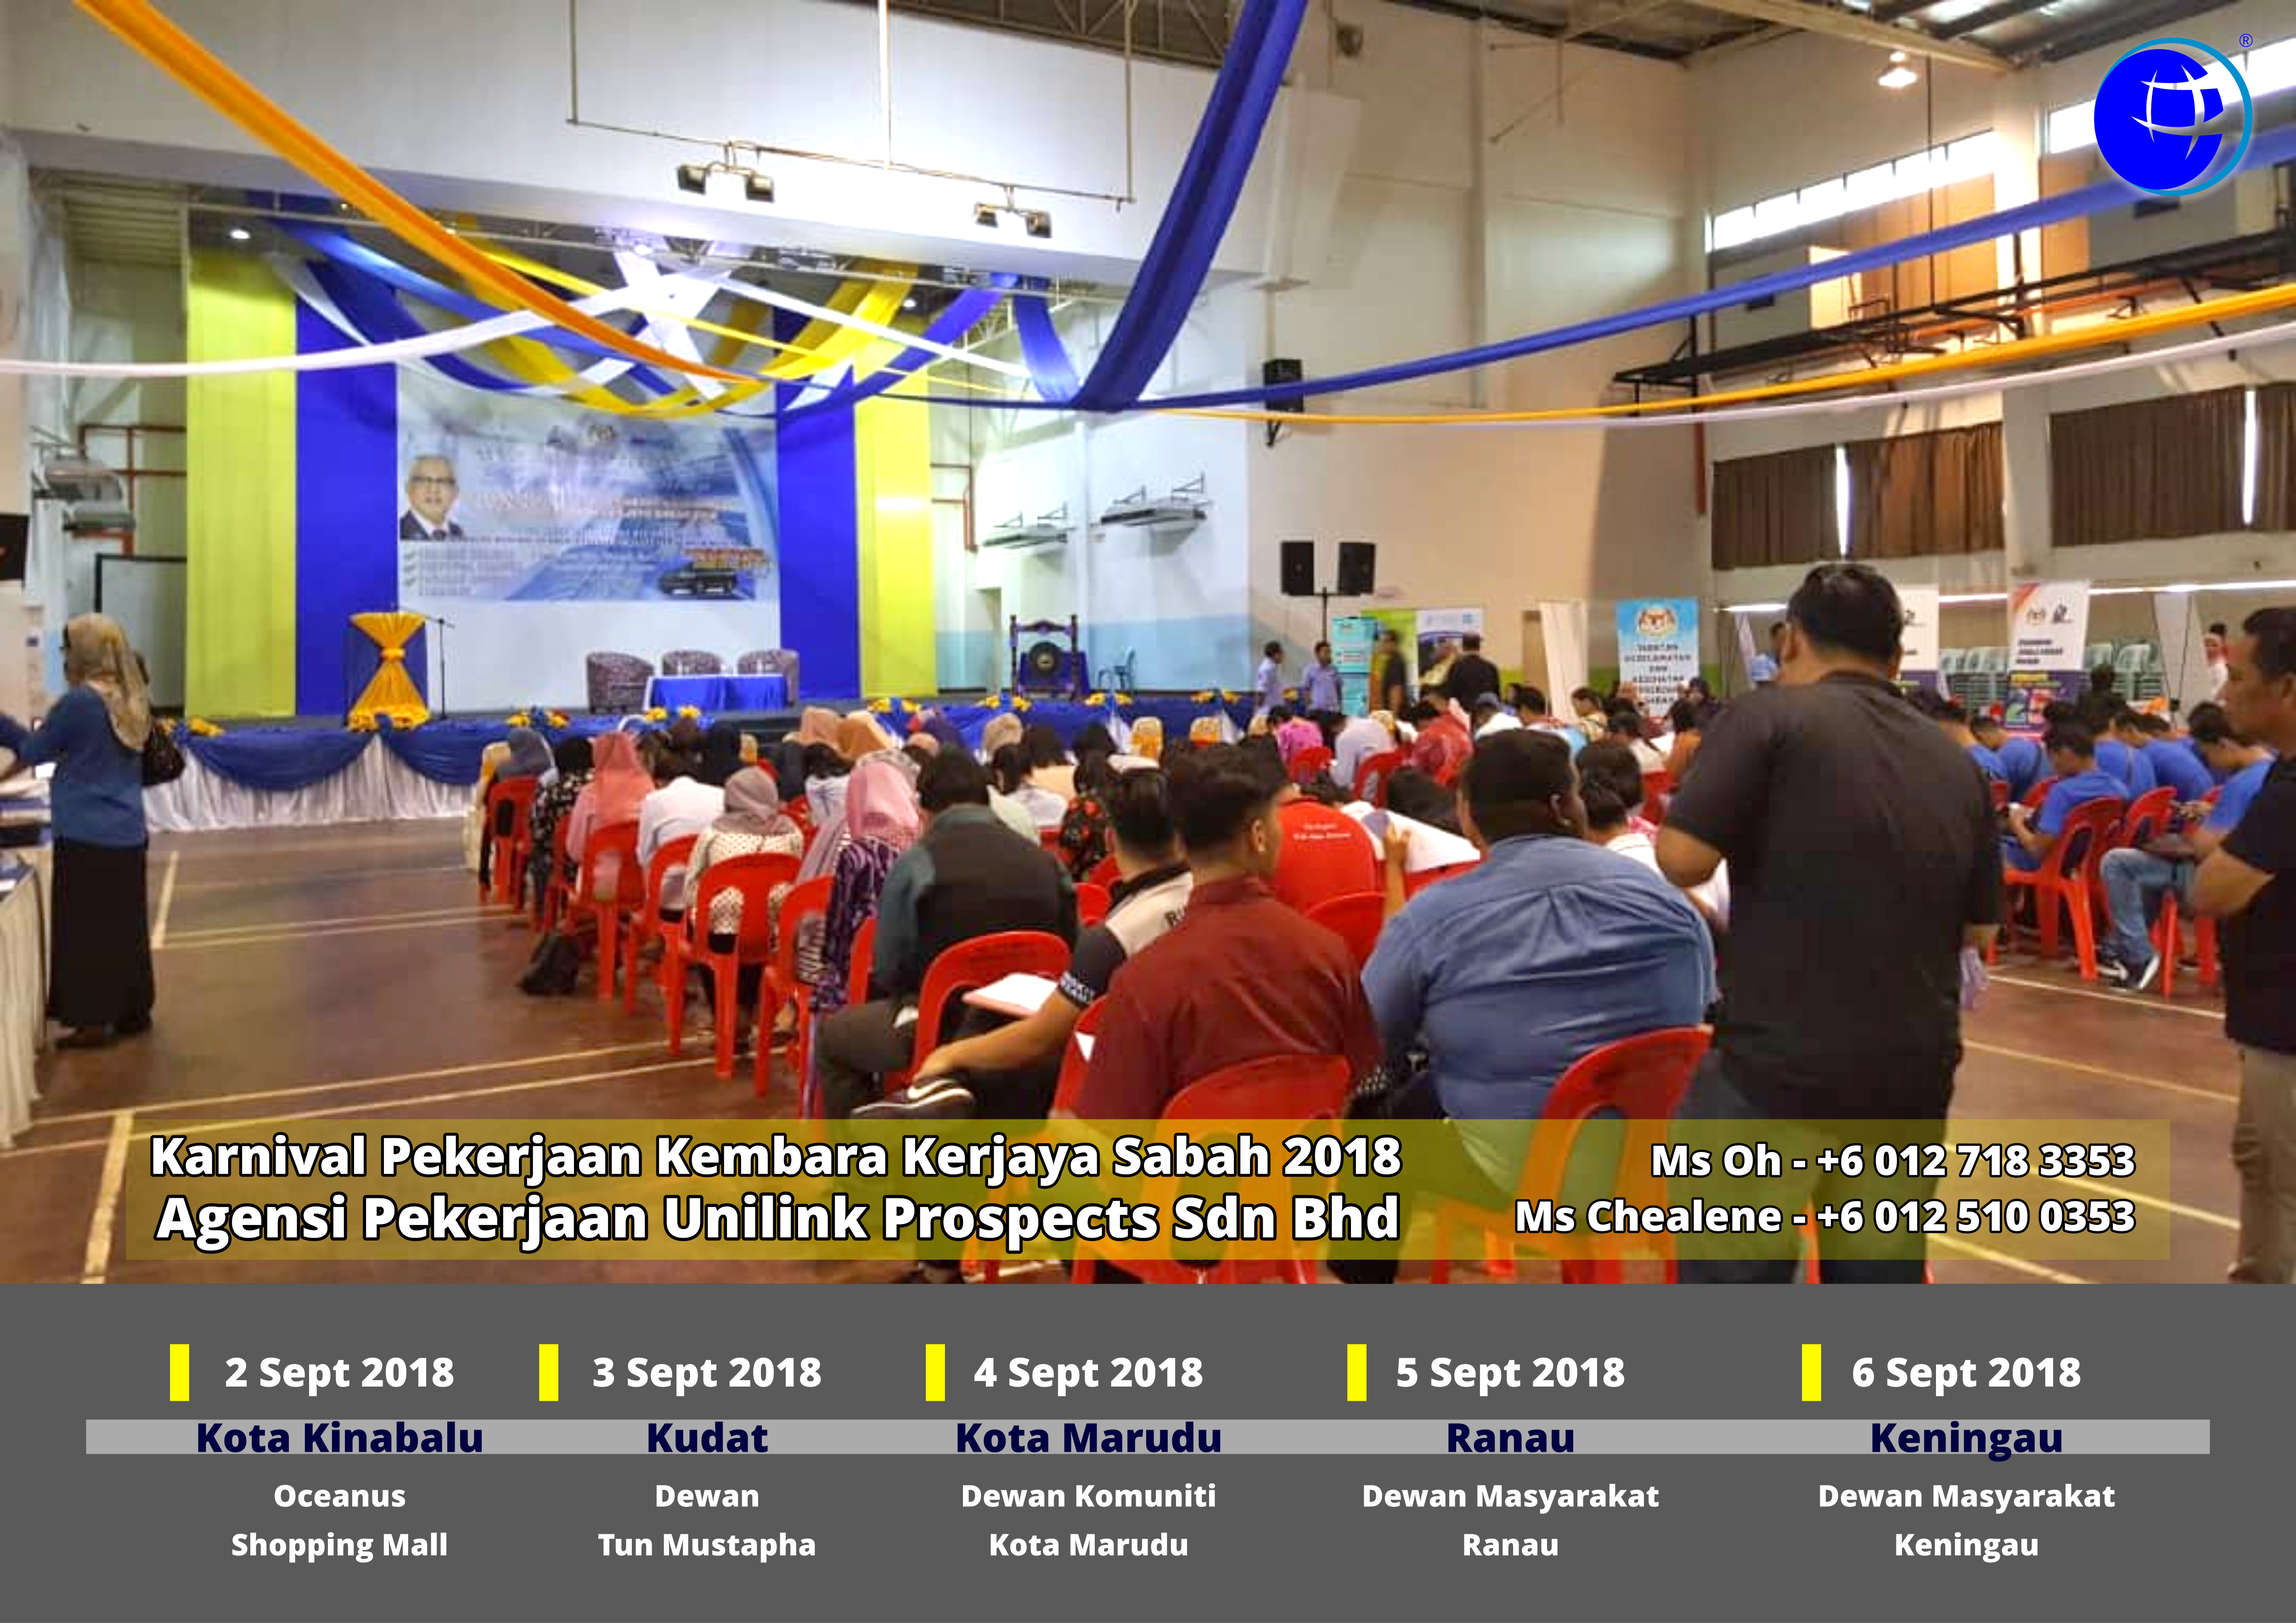 Malaysia Karnival Pekerjaan Kembara Kerjaya Sabah 2018 Agensi Pekerjaan Unilink Prospects Sdn Bhd 专业合法人力资源介绍所 A08